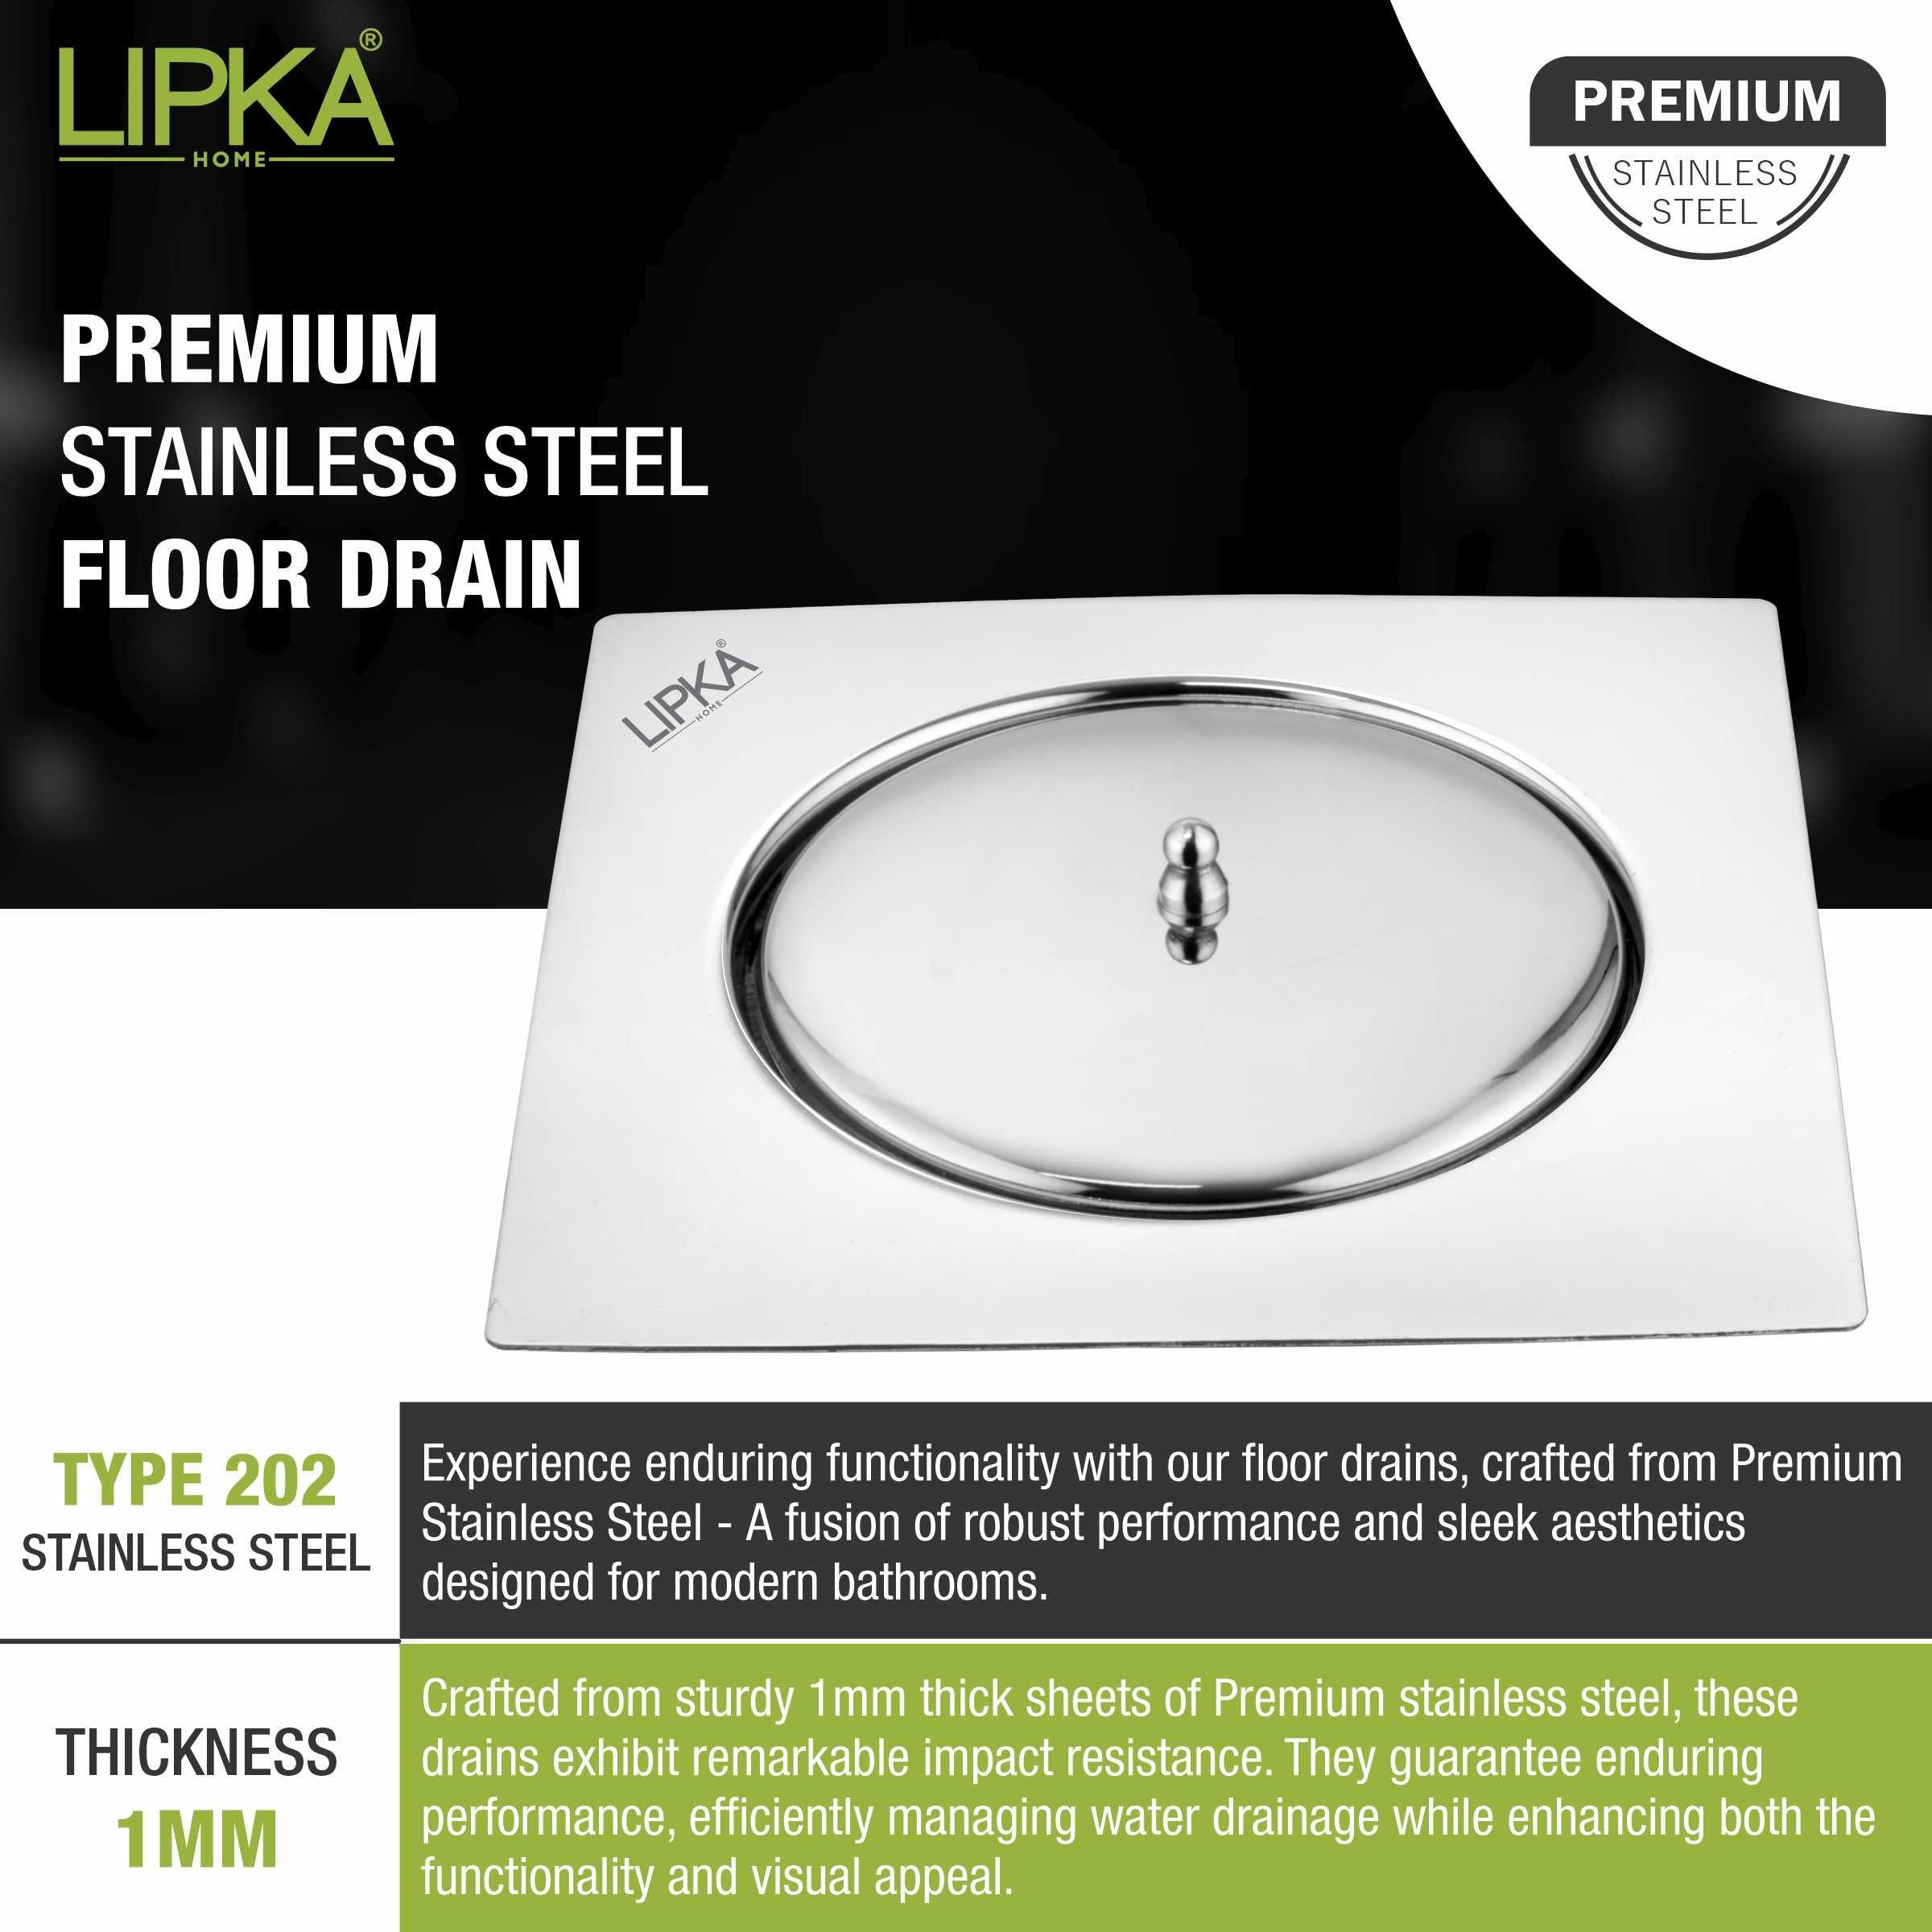 Saturn Square Flat Cut Floor Drain (6 x 6 Inches) - LIPKA - Lipka Home